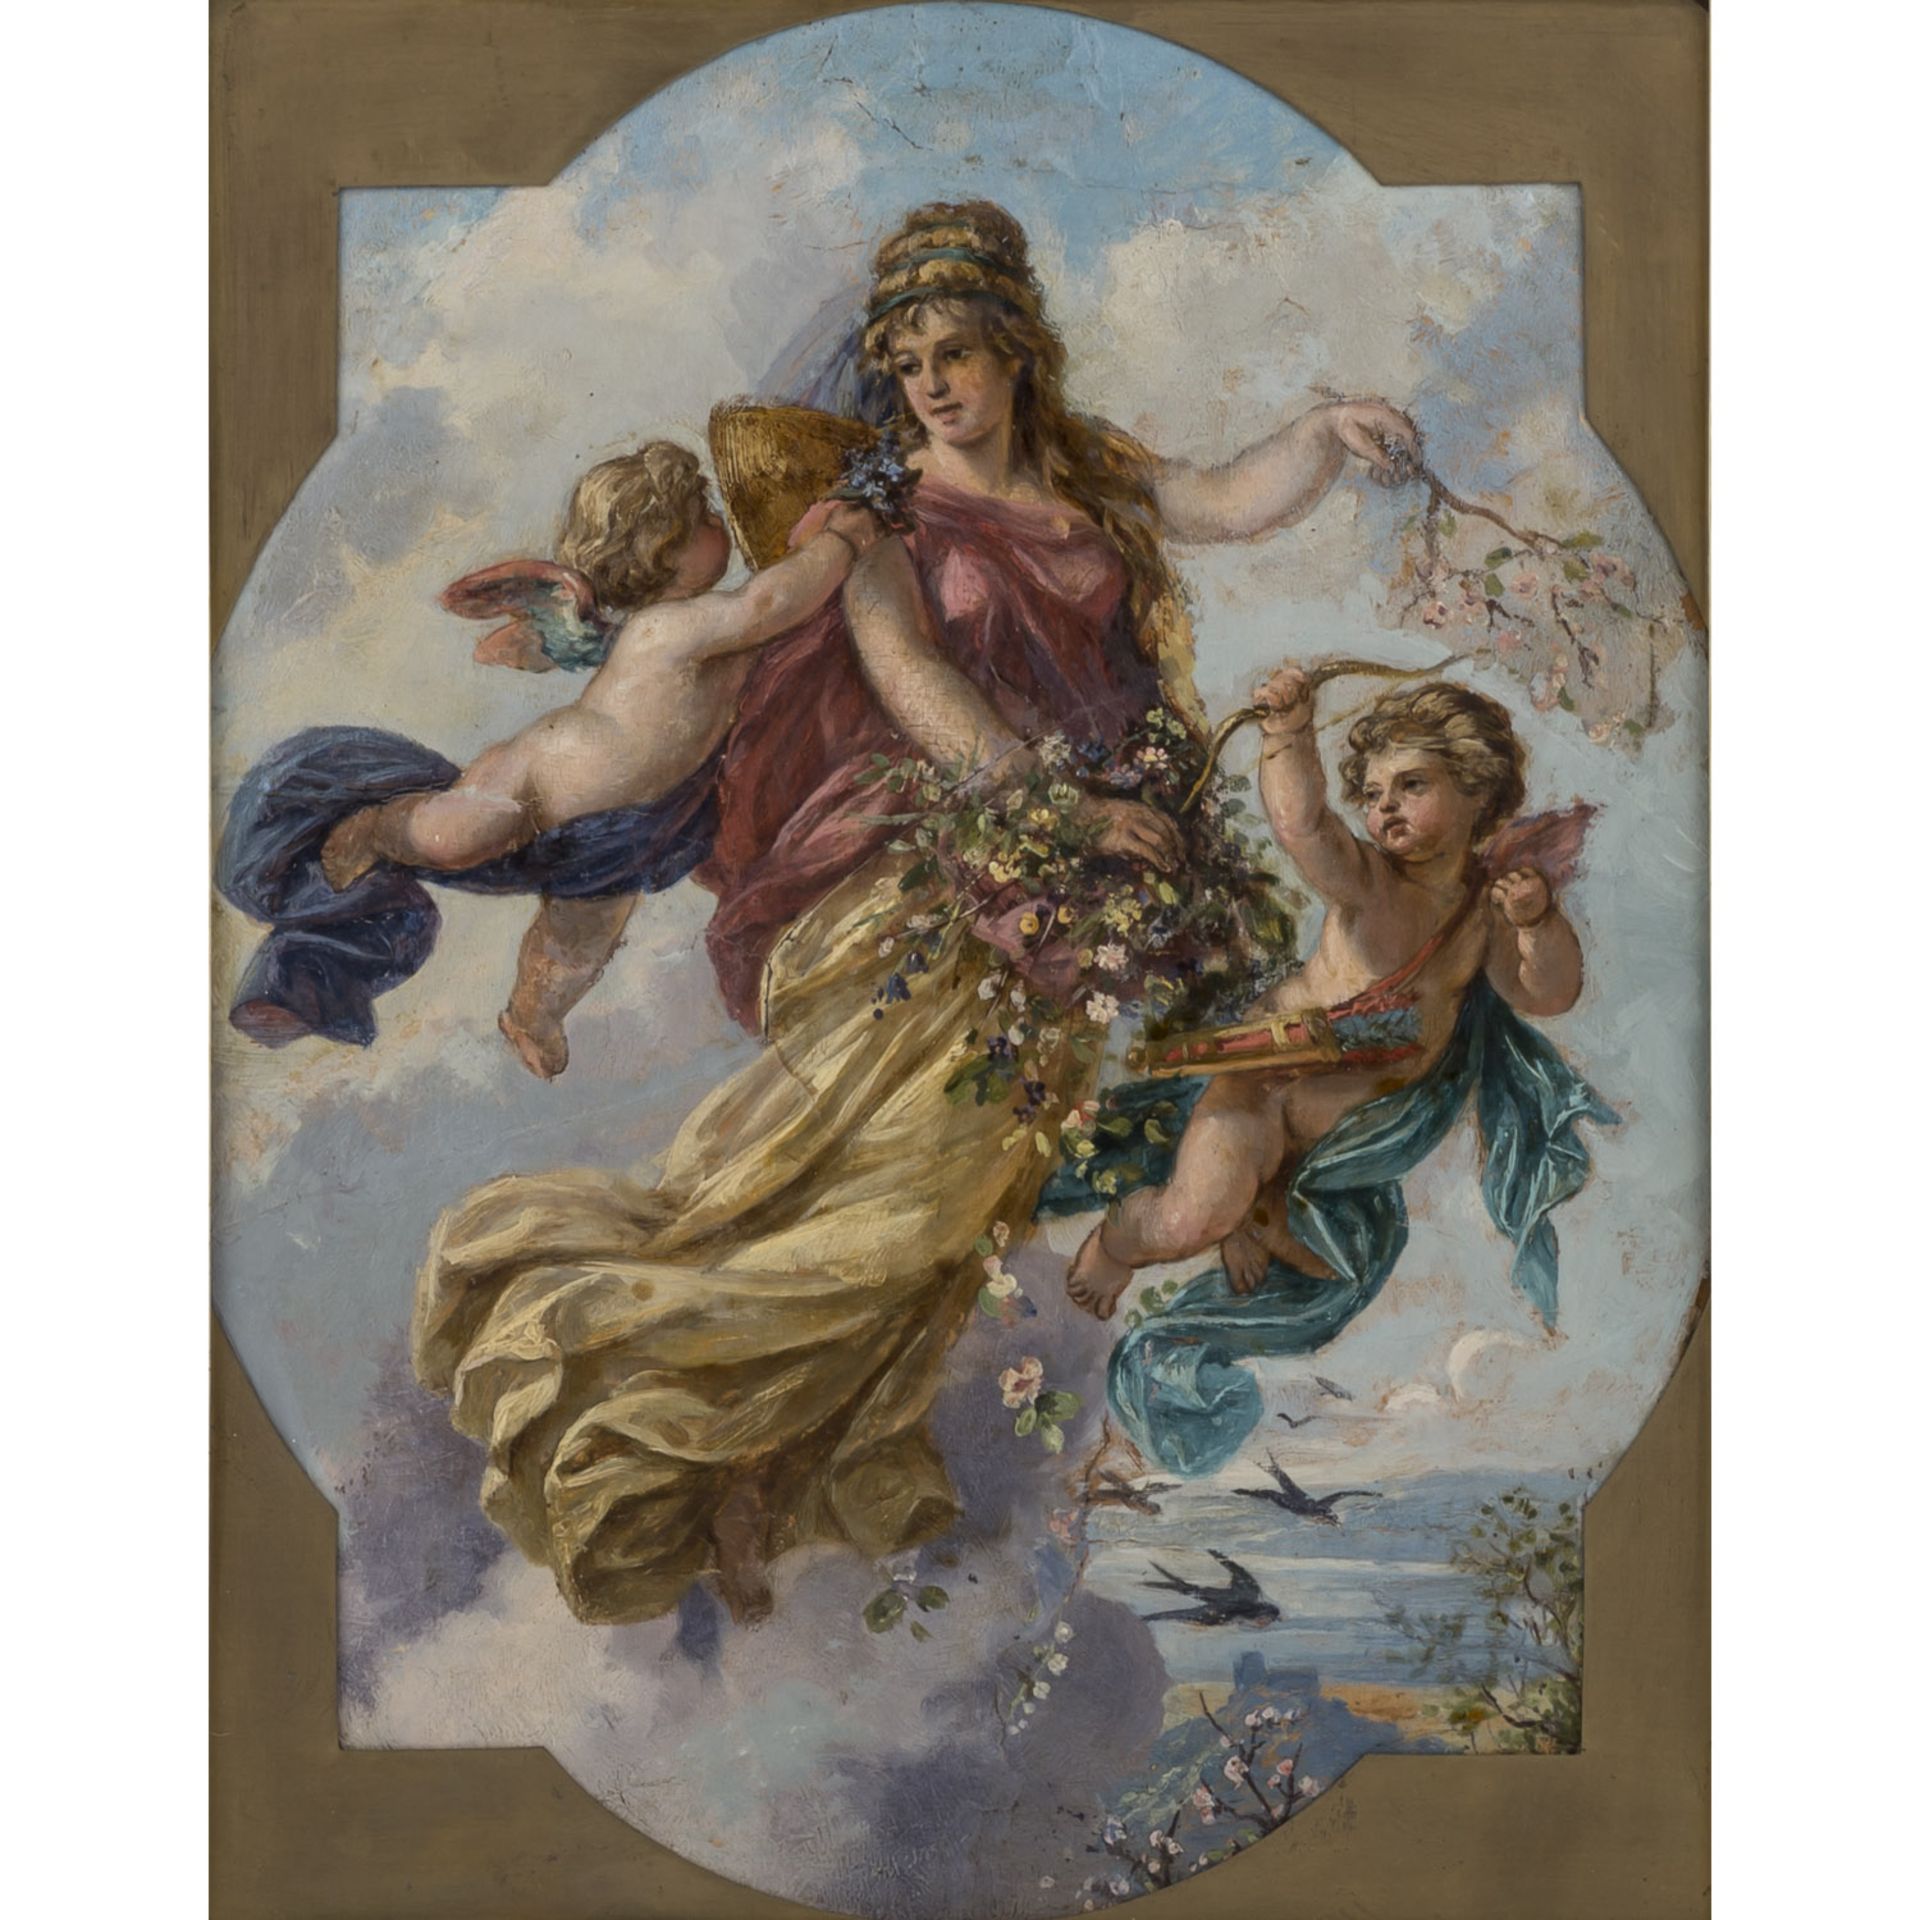 Unbekannte(r) Künstler(in) des 19./20. Jh. 'Venus als Frühlingsgöttin', um 1900.Öl/Papier/Karton,